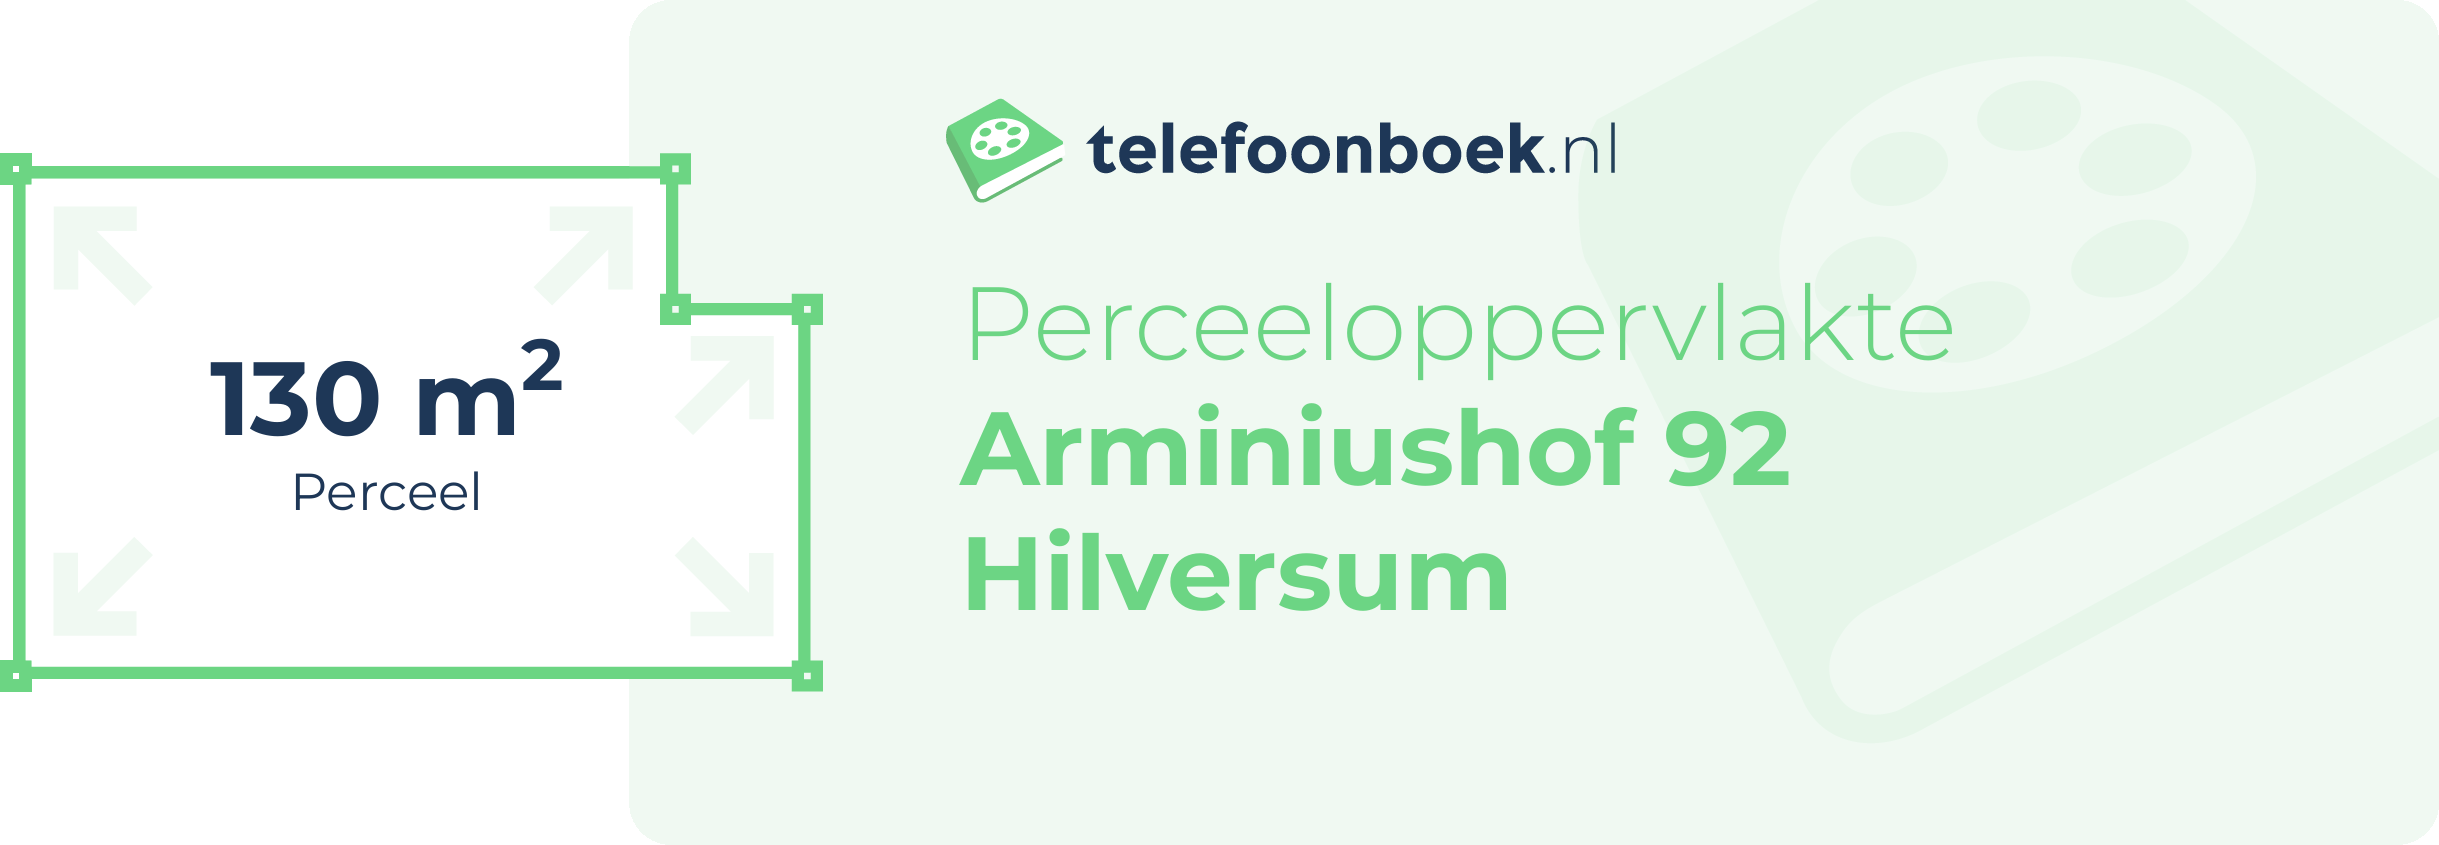 Perceeloppervlakte Arminiushof 92 Hilversum